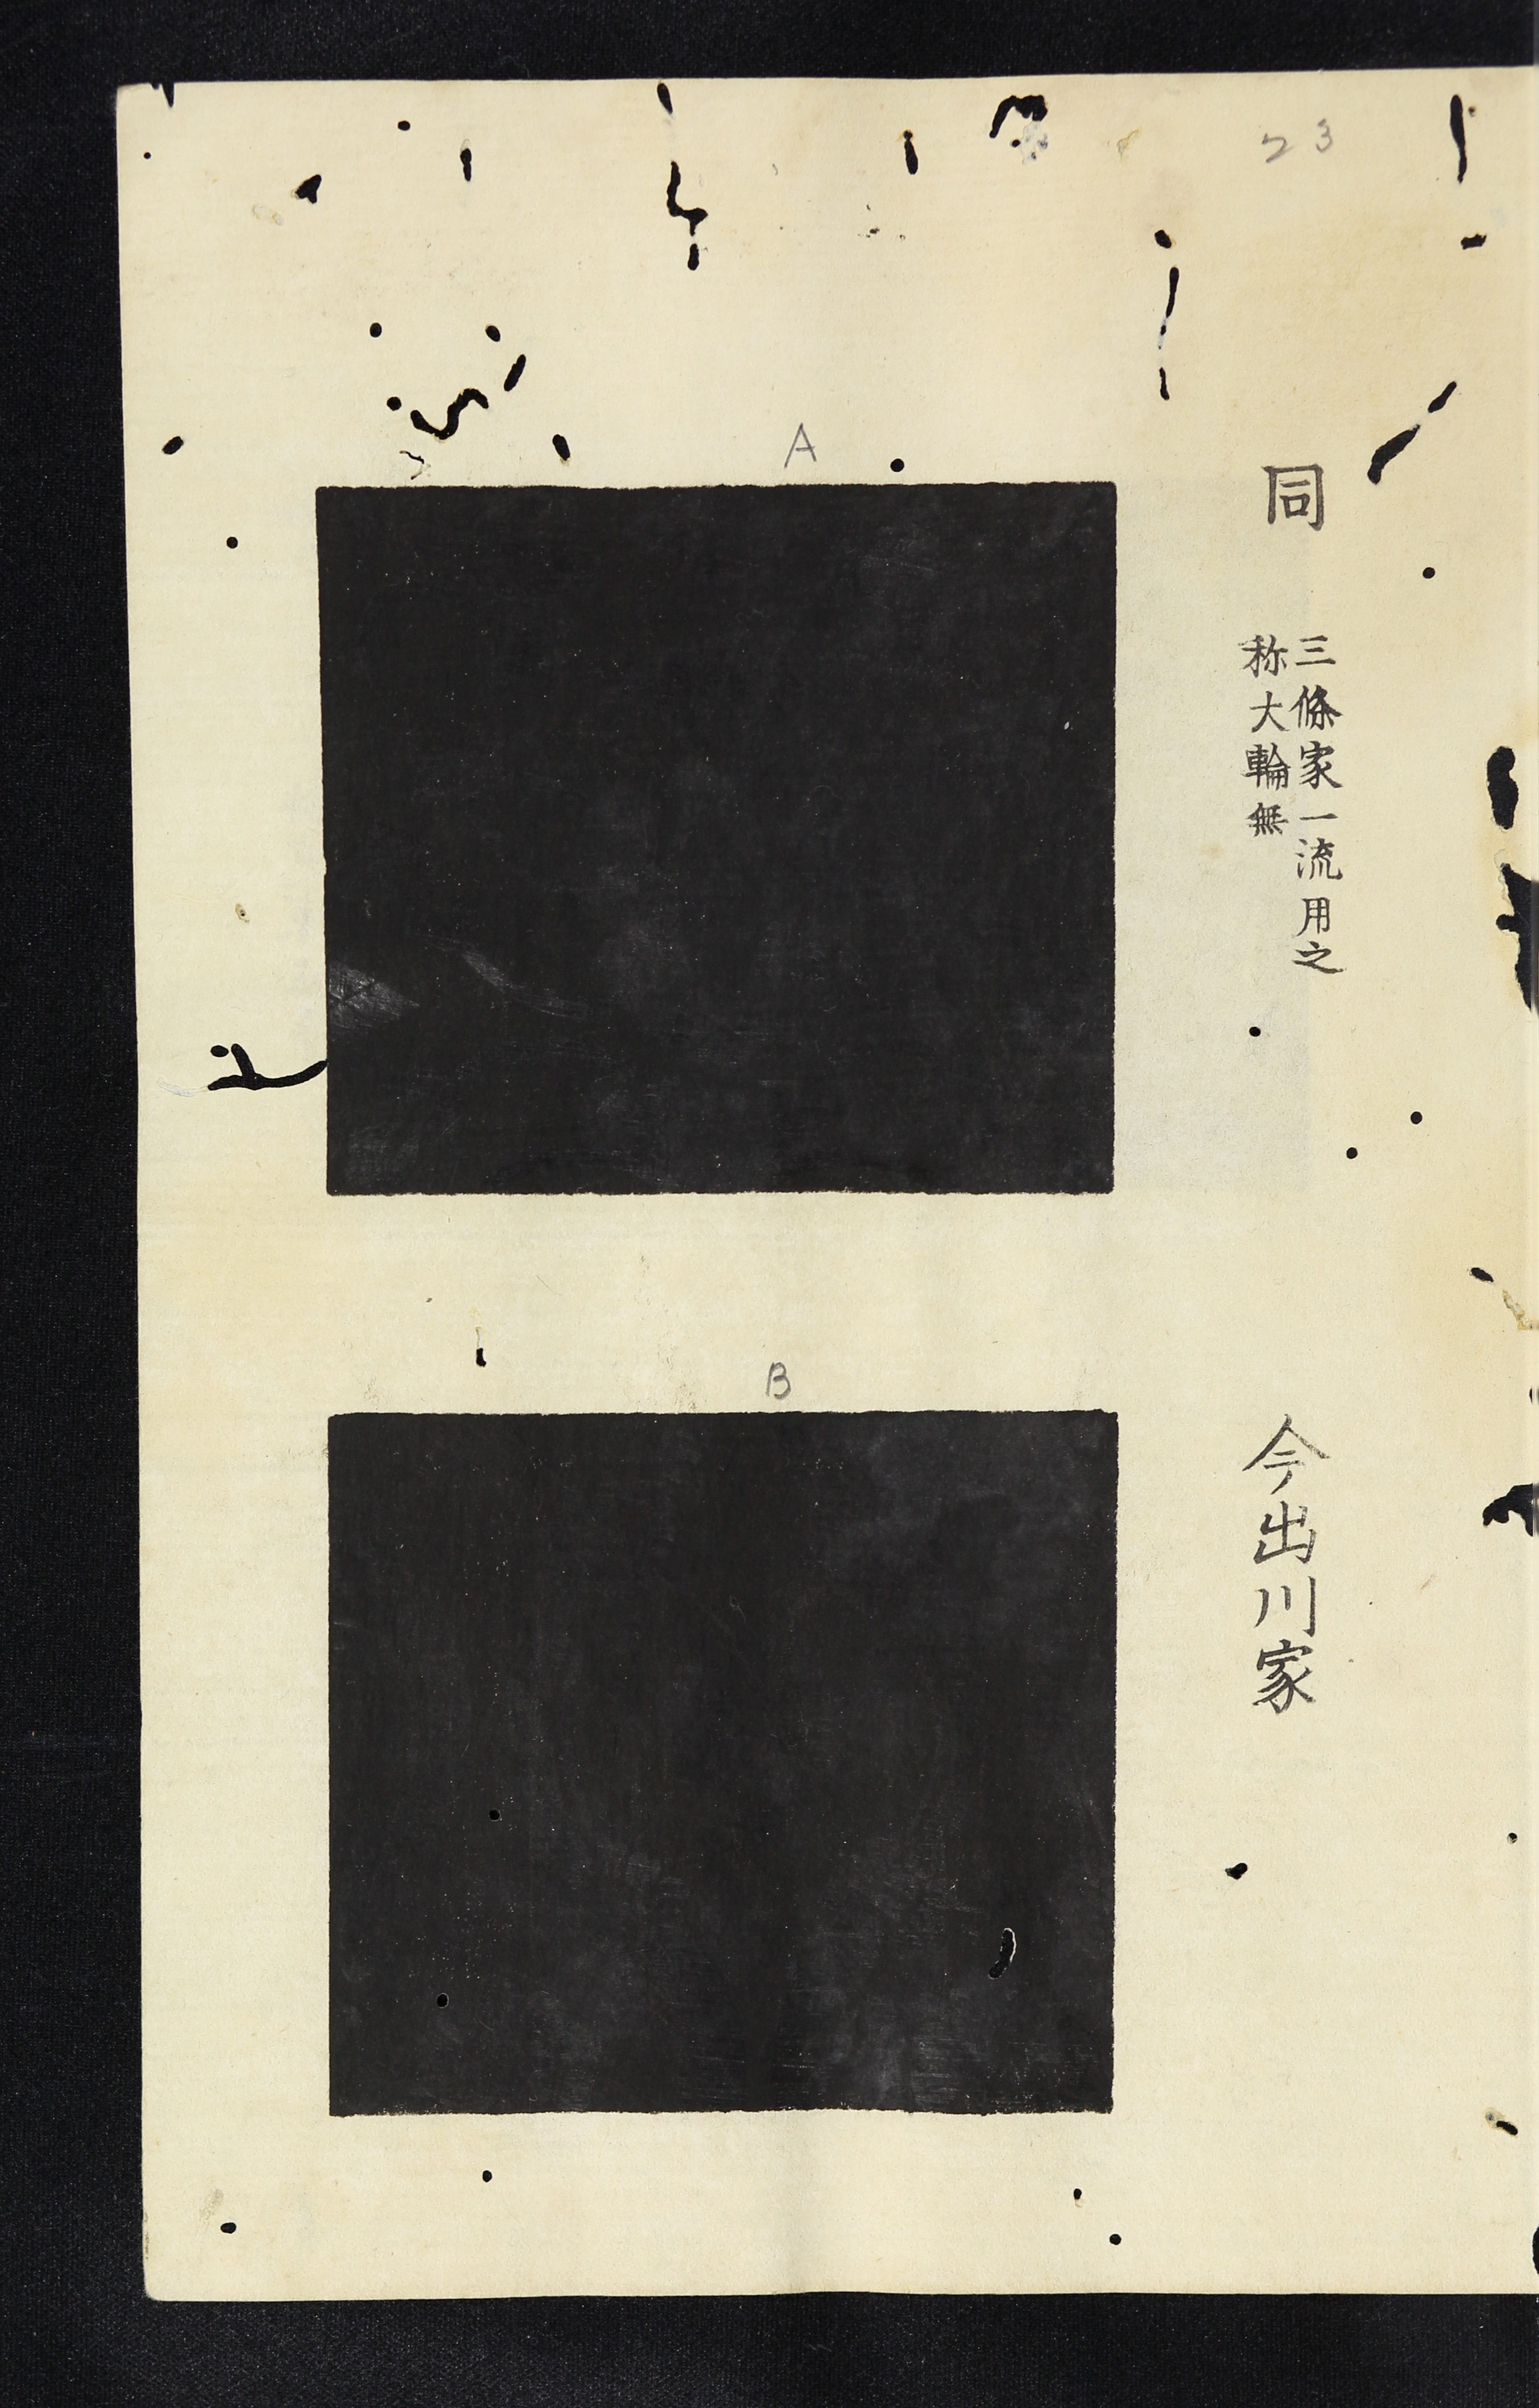 Matsuoka Shiben Patterns Of Brocades Worn At Court Japan Edo Period 1615 1868 The Metropolitan Museum Of Art